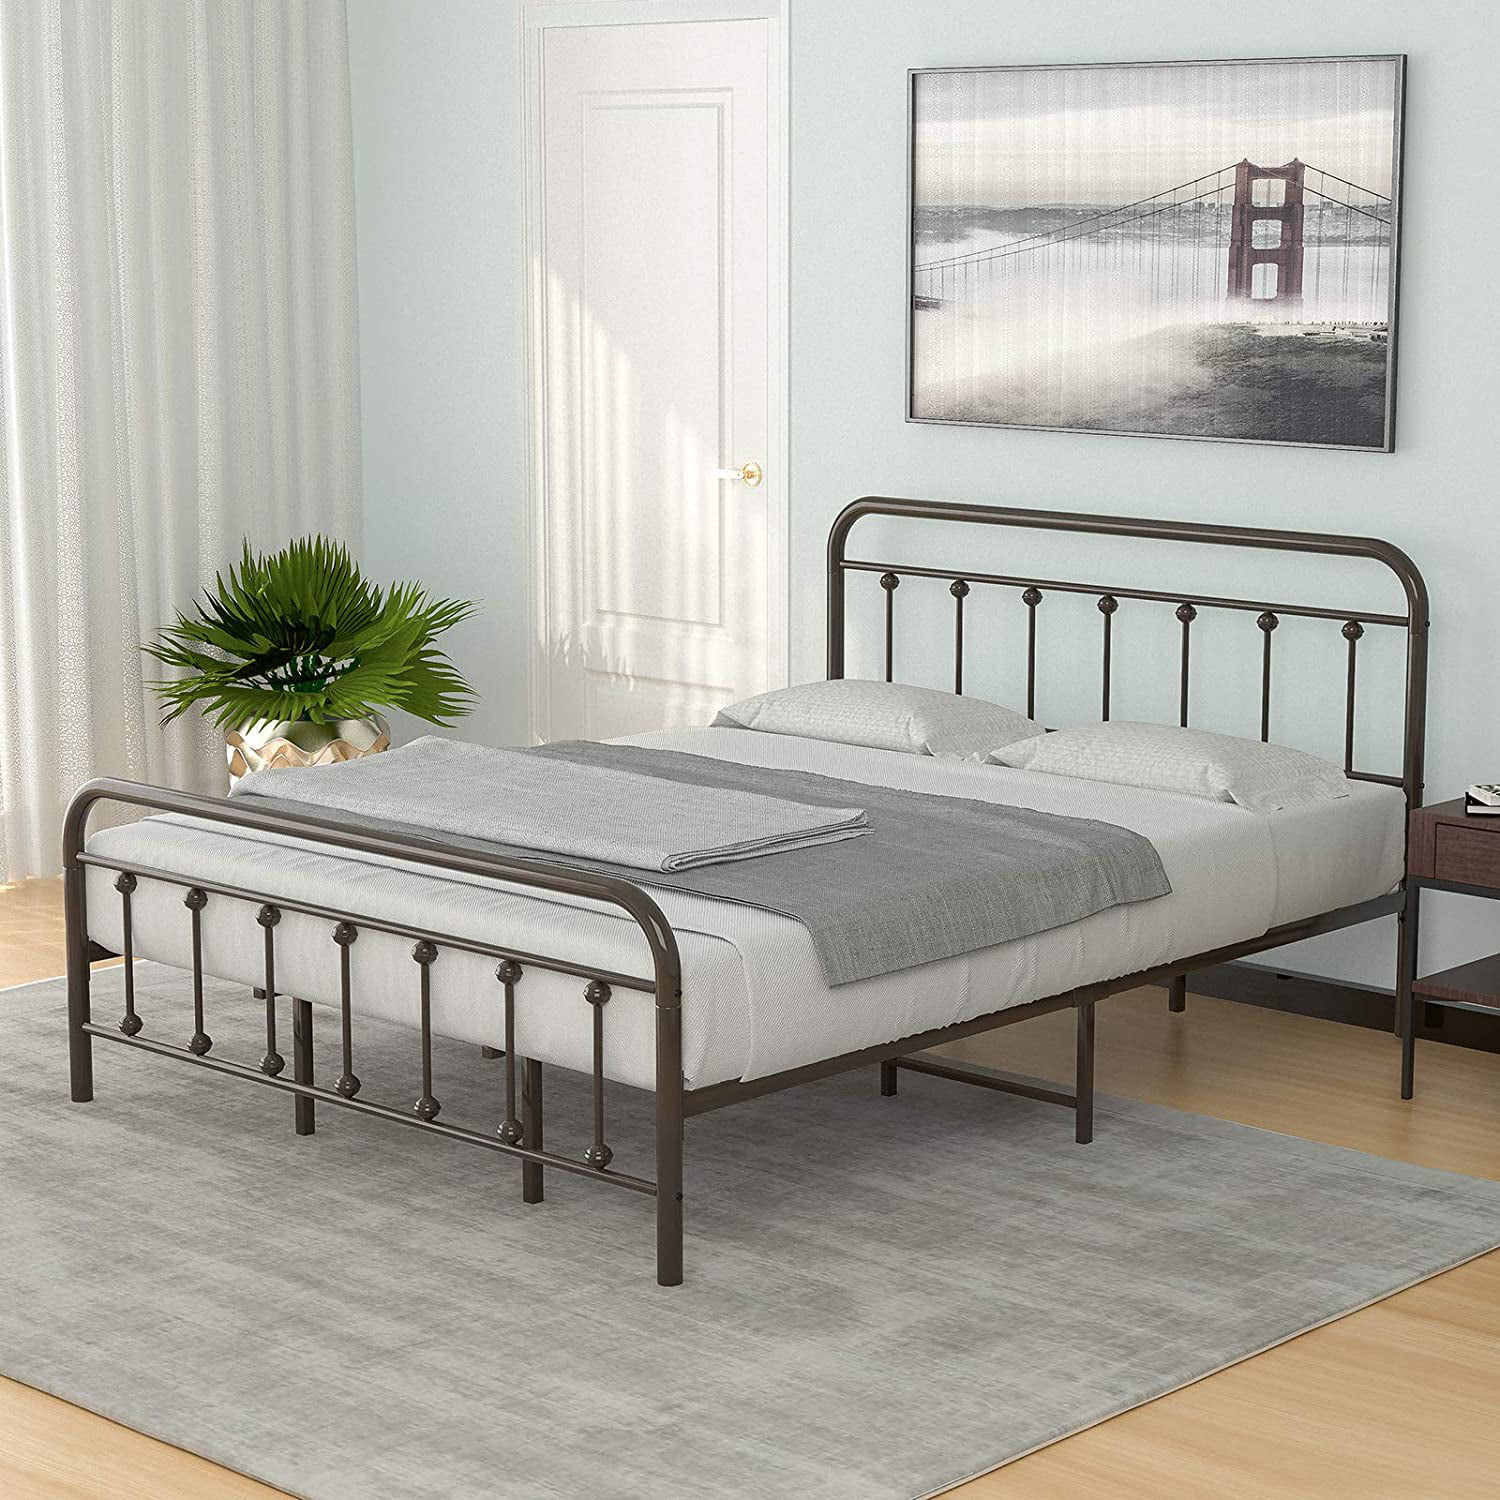 Mecor King Size Metal Platform Bed, King Metal Bed